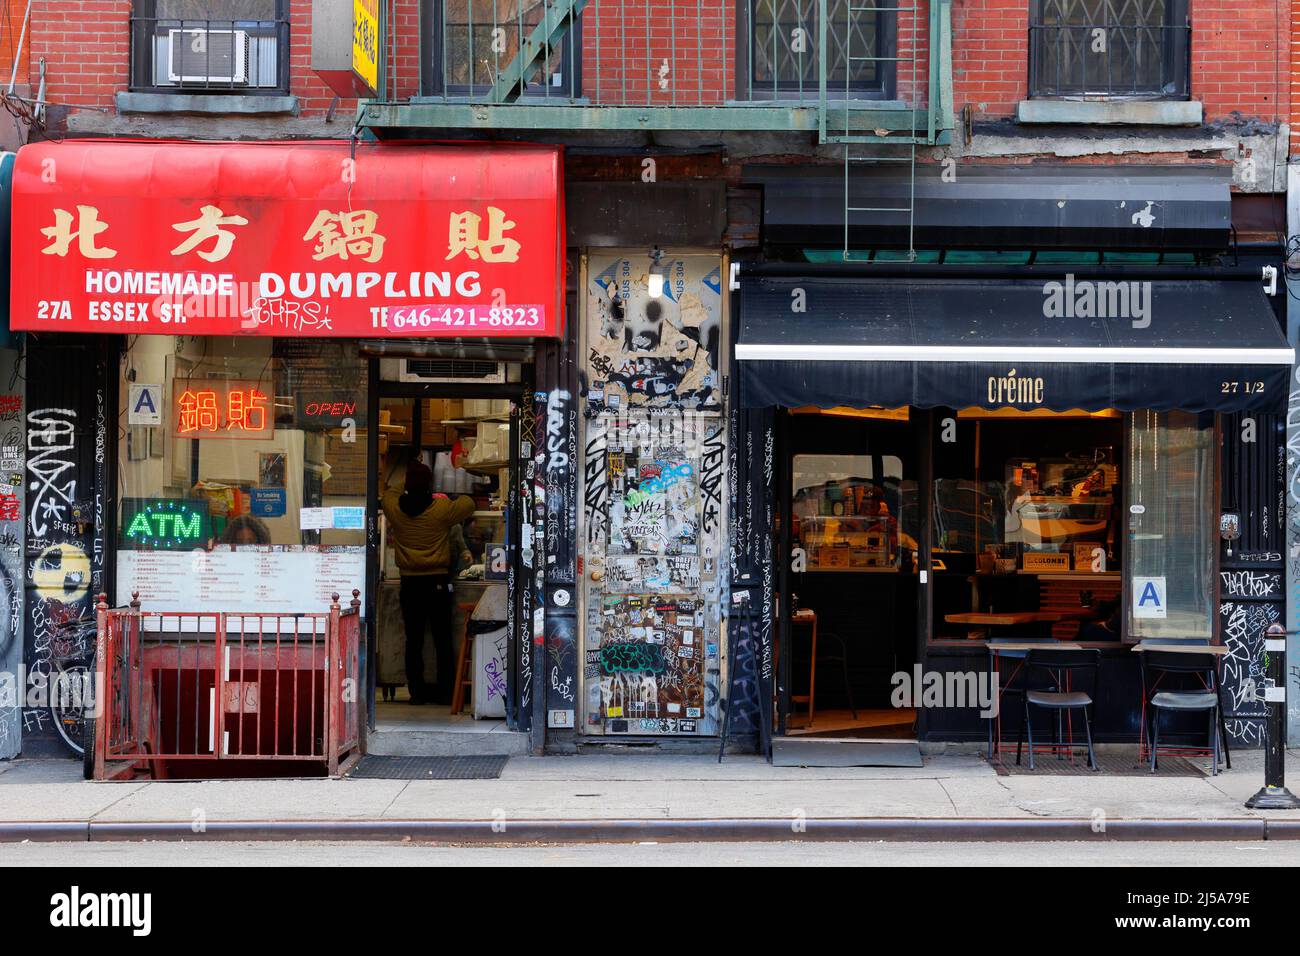 Casa Dumpling, Creme, 27 Essex St, New York, NYC storefront foto di un gnocchi fritti, e un caffè Matcha nel Lower East Side Foto Stock